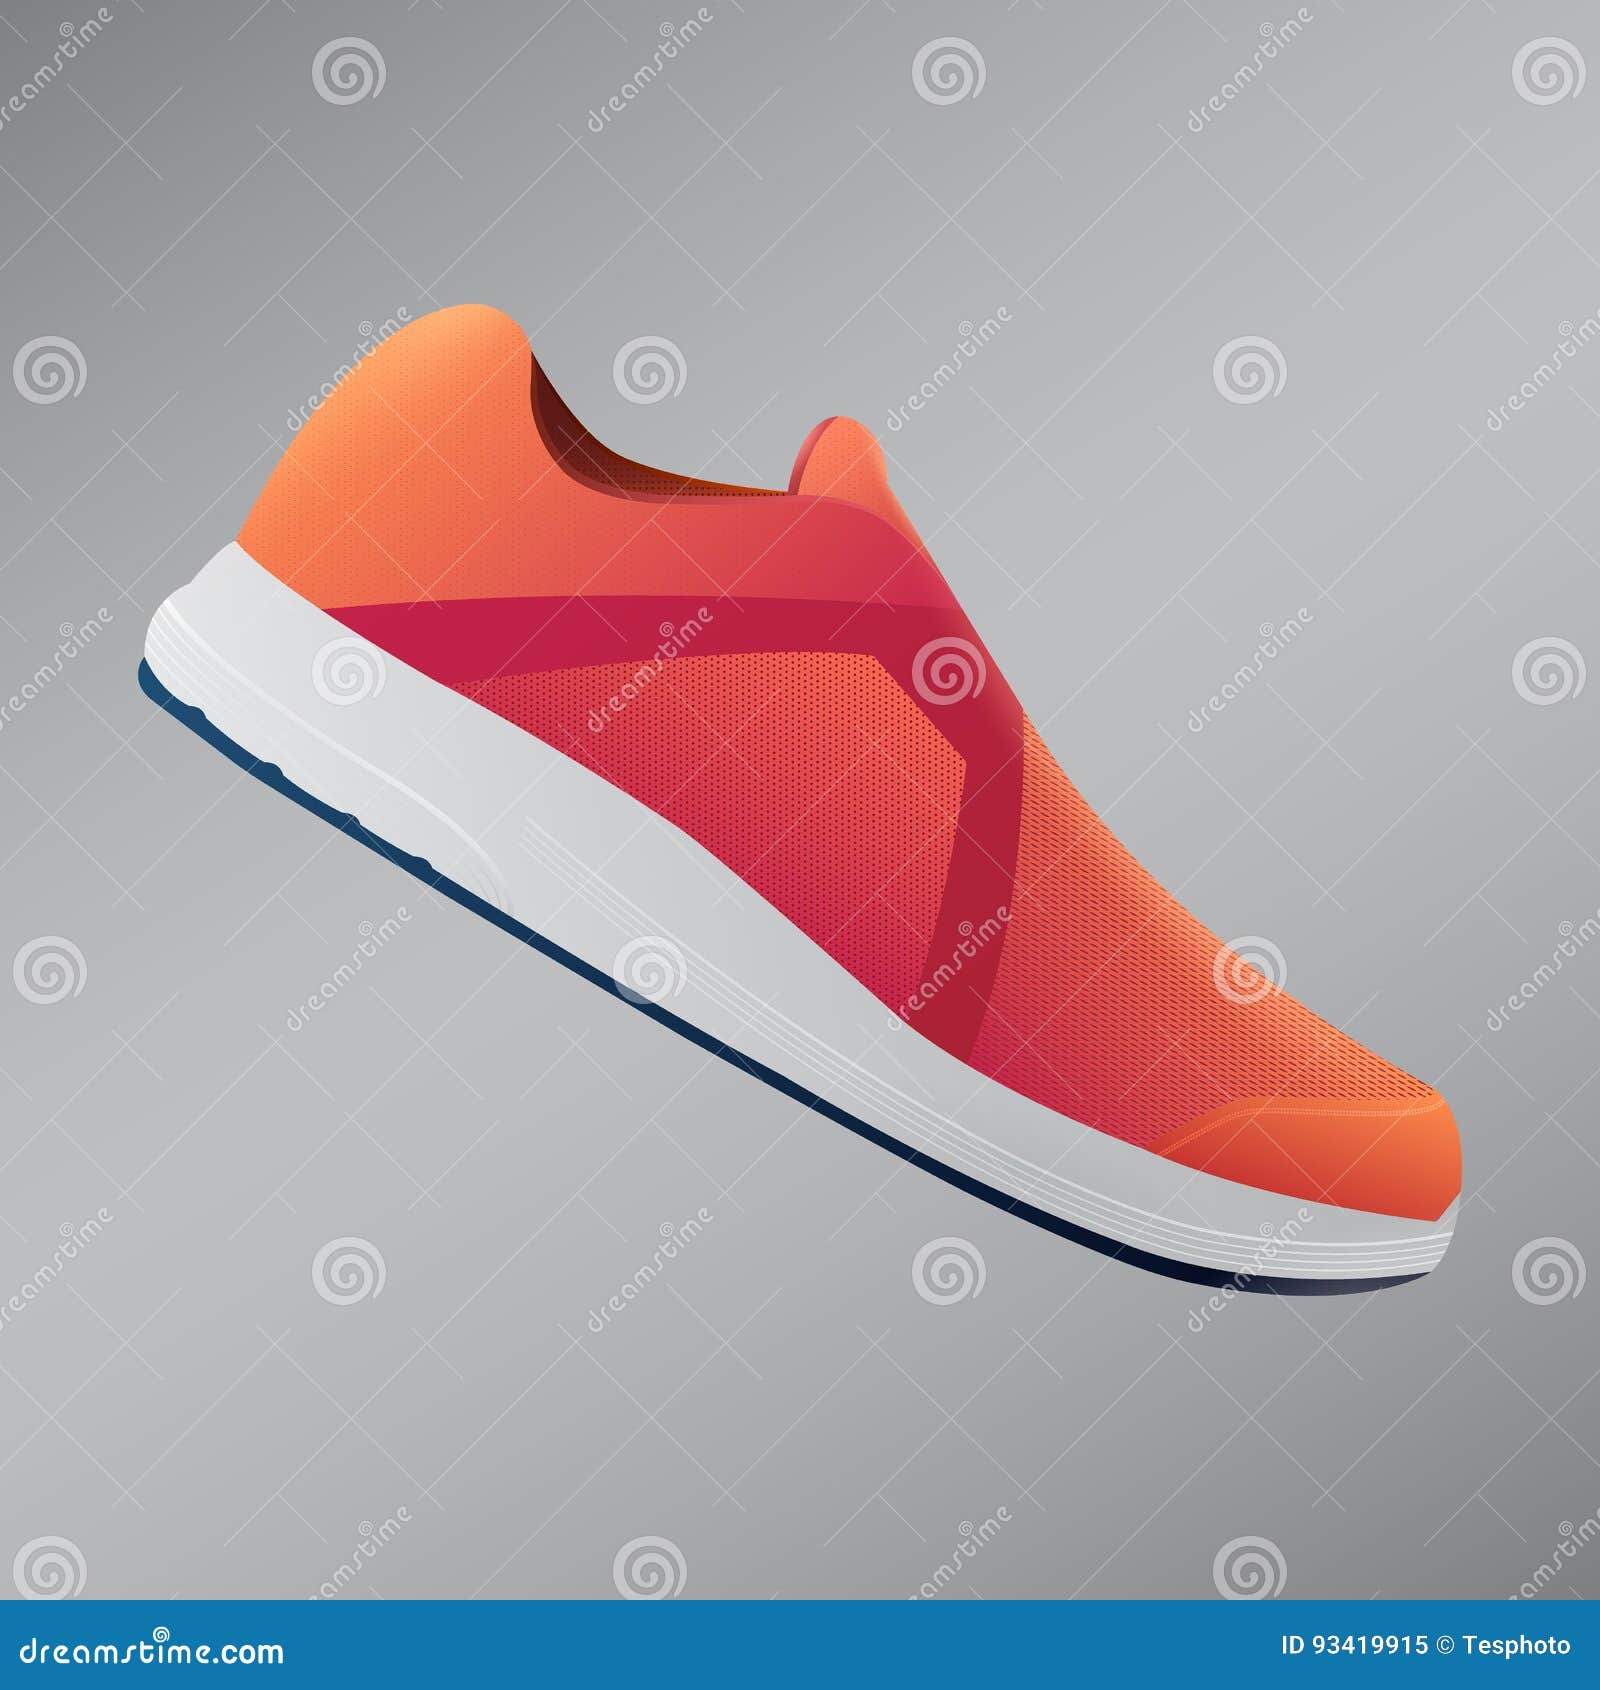 Shoes Design. Running Shoes. Vector Illustration. Orange Sneak Stock ...